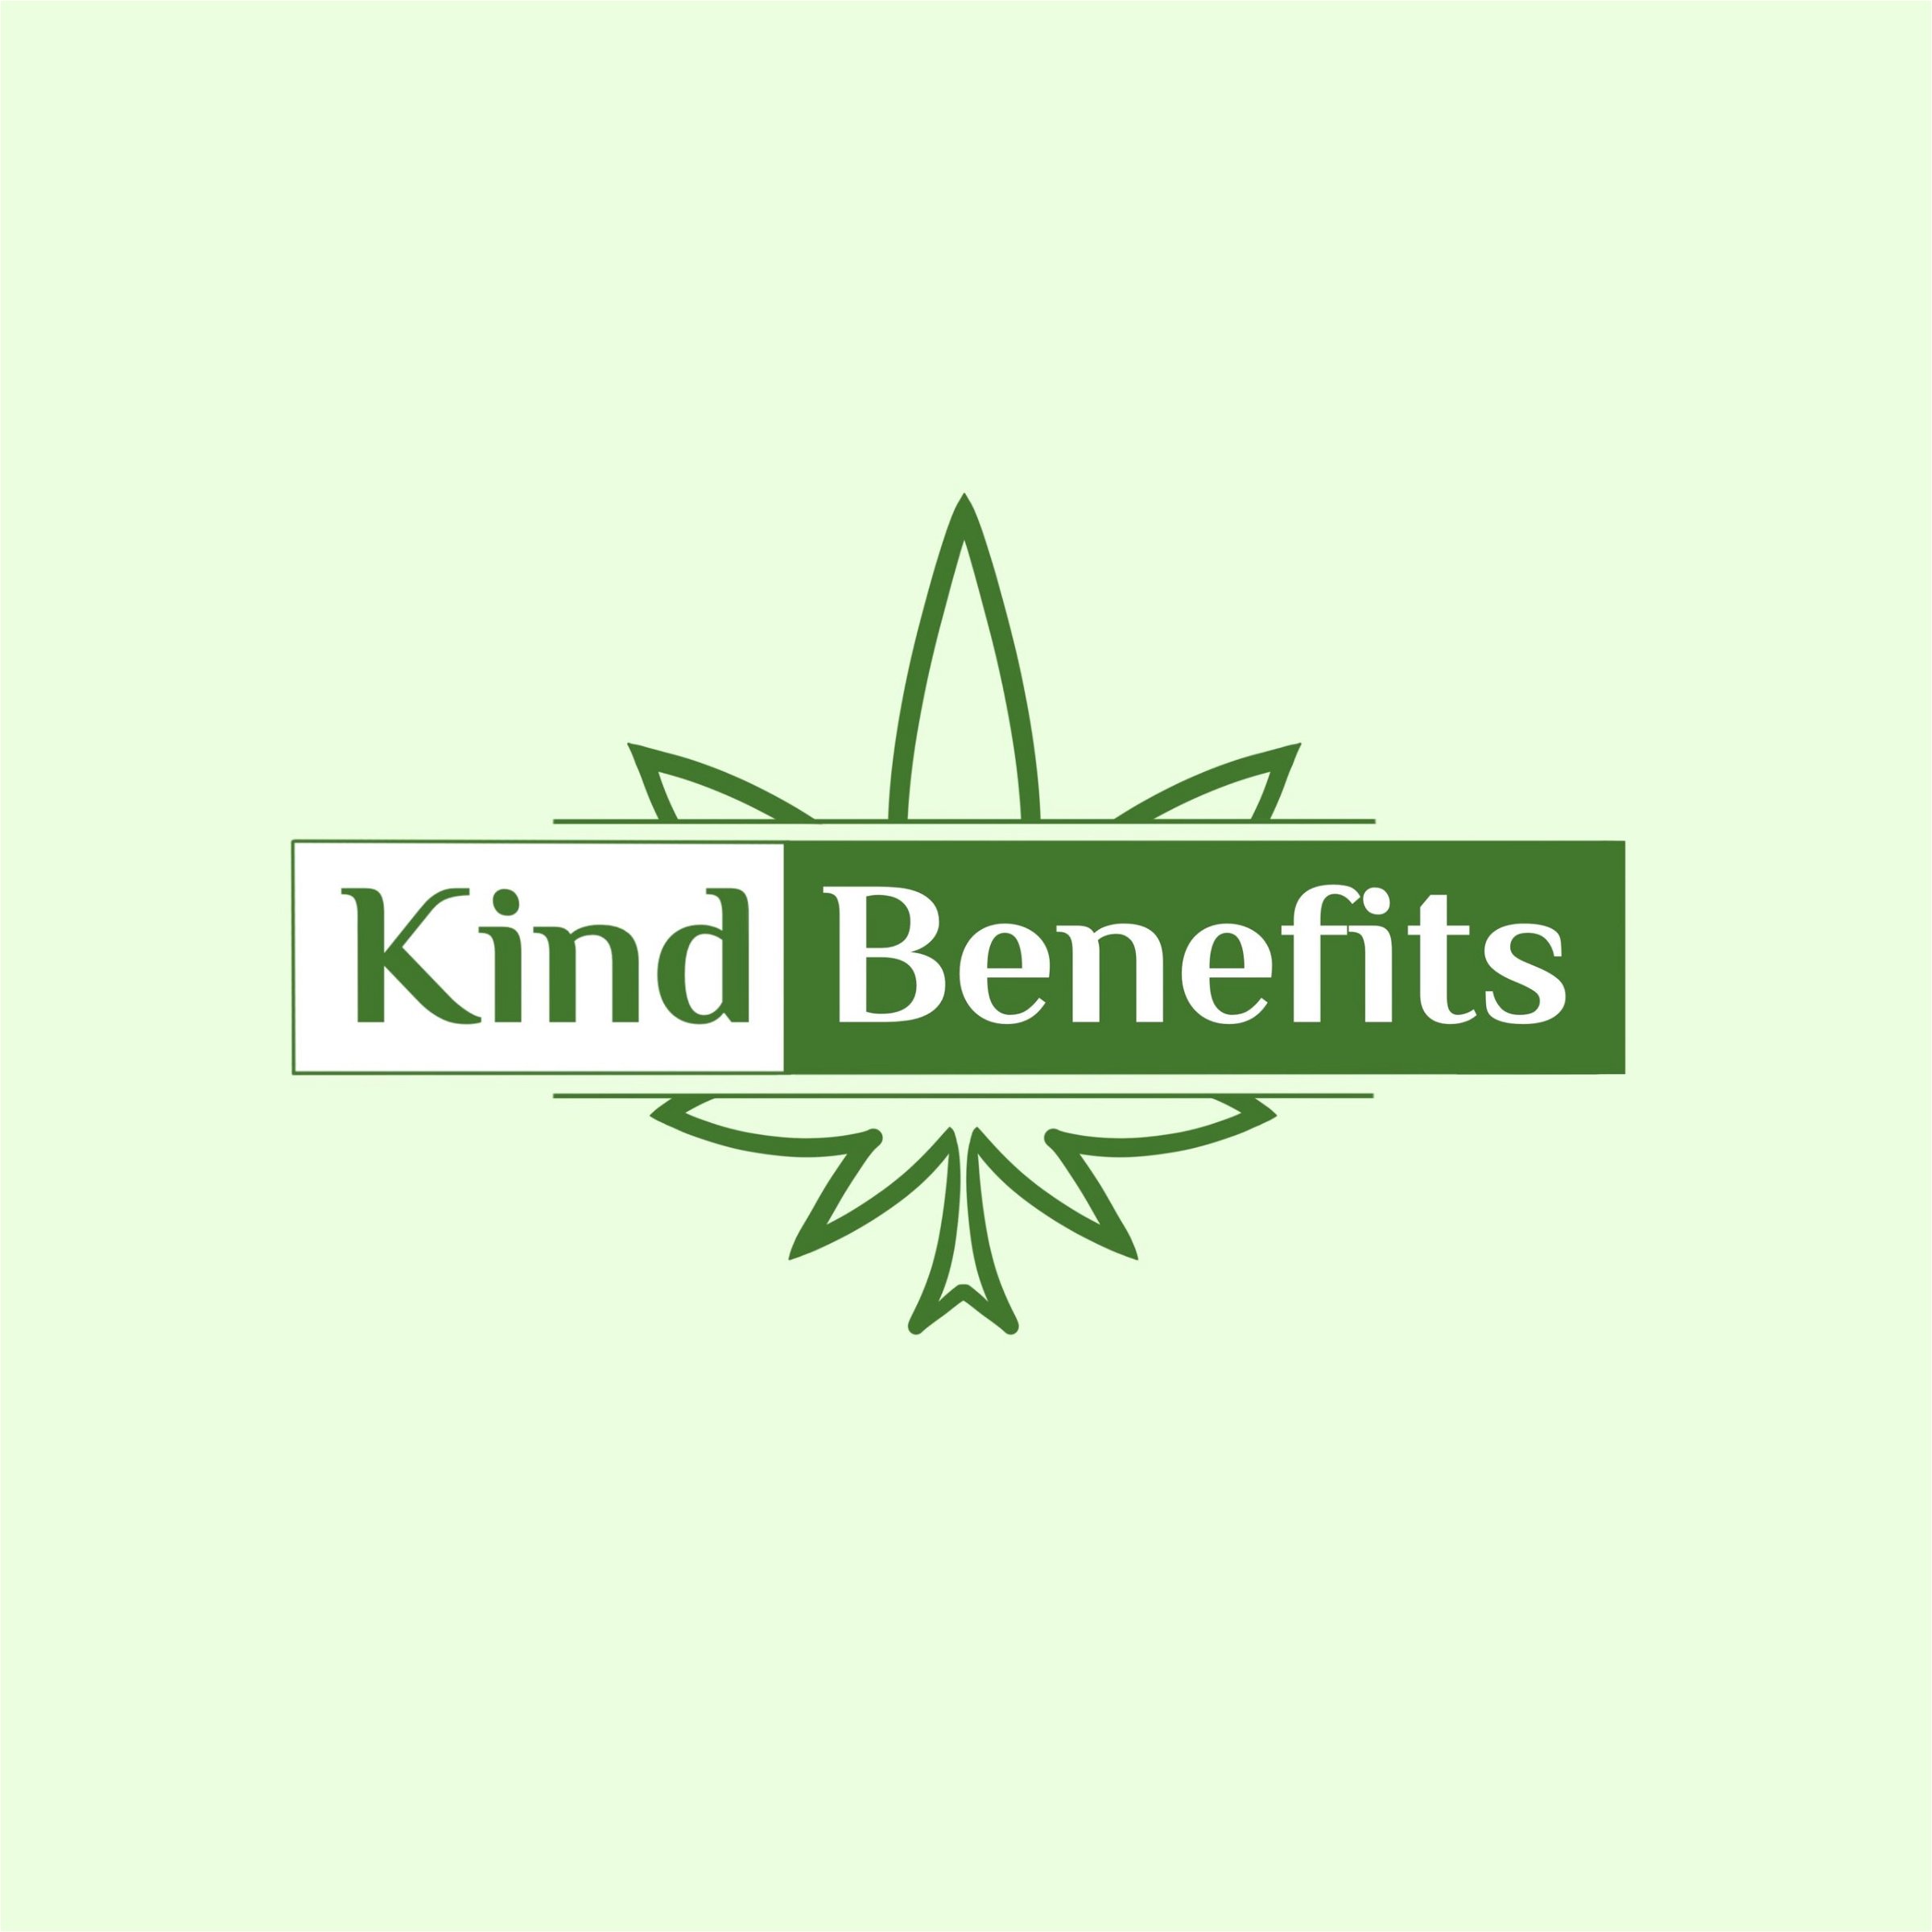 Kind Benefits